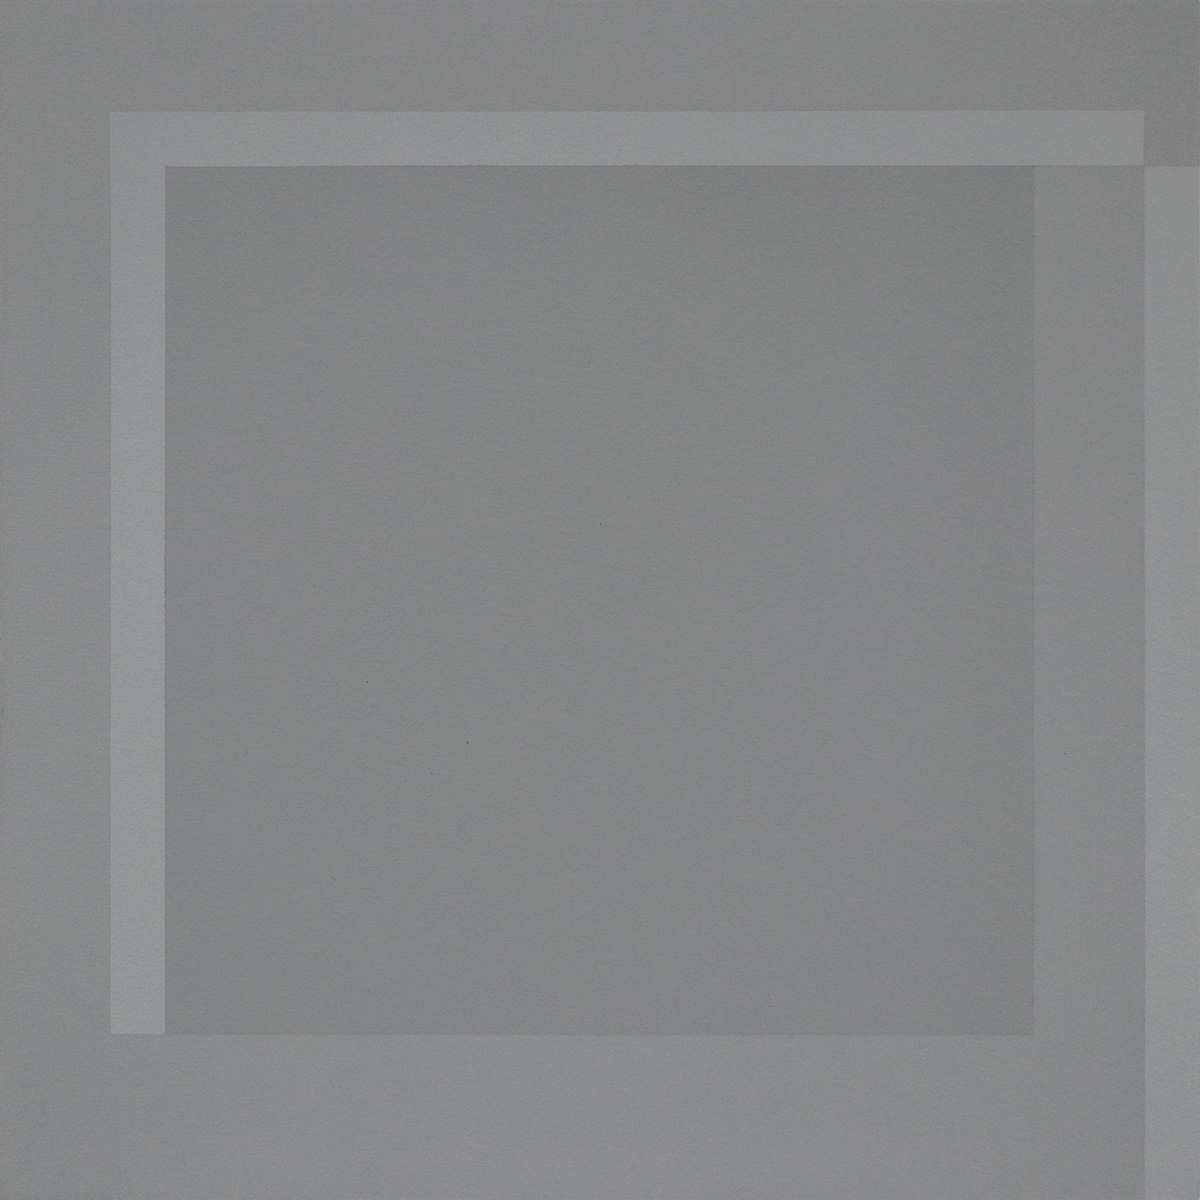 Dimension 31 (Grau), 200655 x 55 cmAcryl auf Papier, auf Auludibond